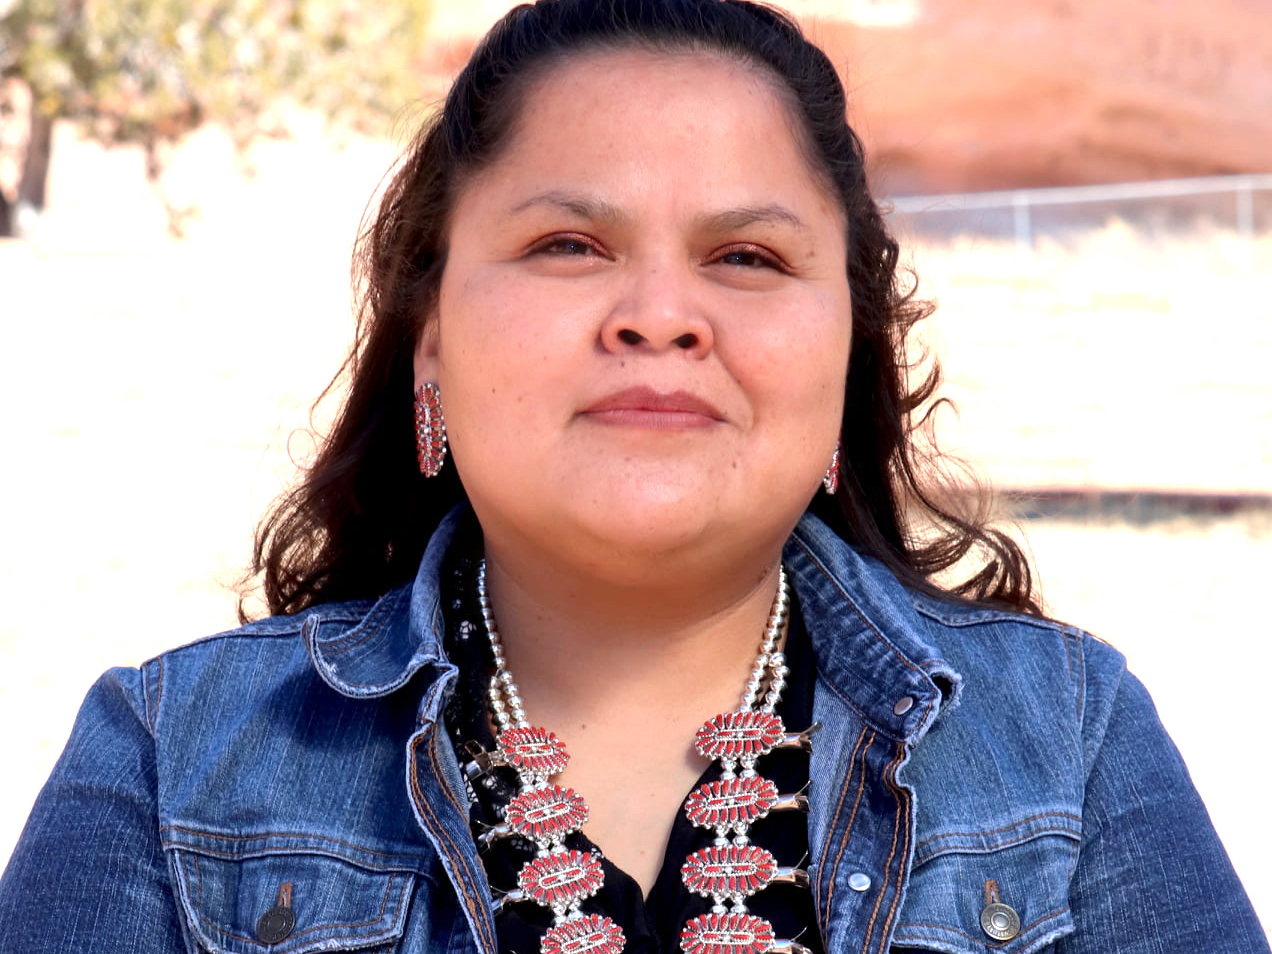 Reycita Billie named to Missing Murdered Indigenous Women task force